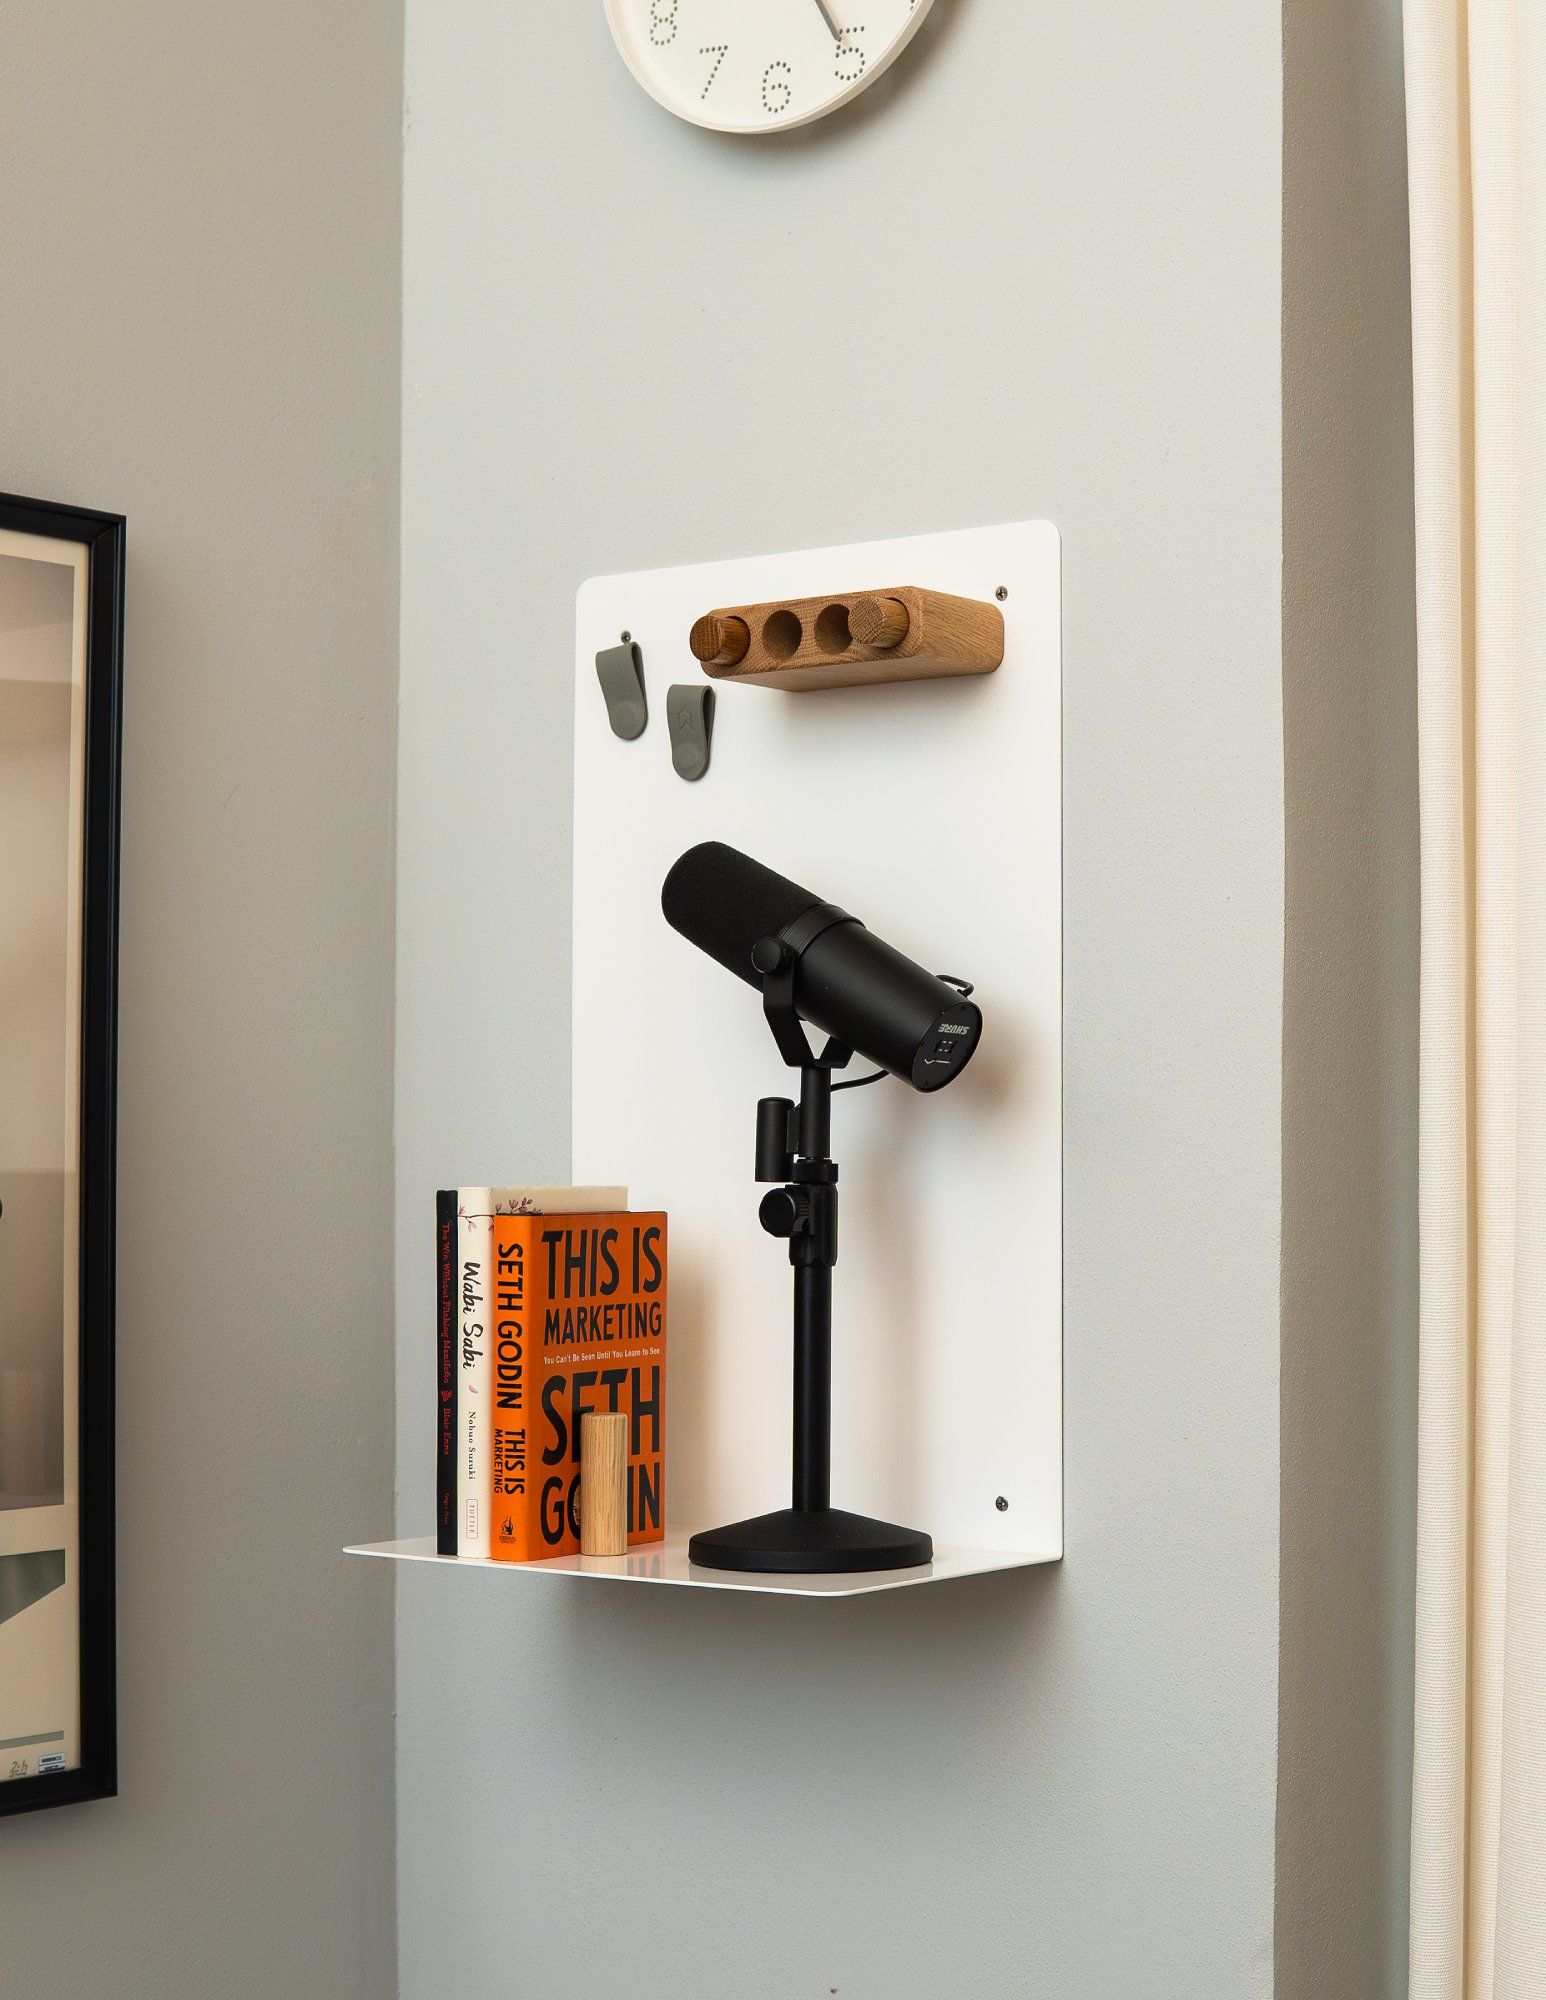 A Shure SM7B microphone and three books on a white minimalist wall shelf